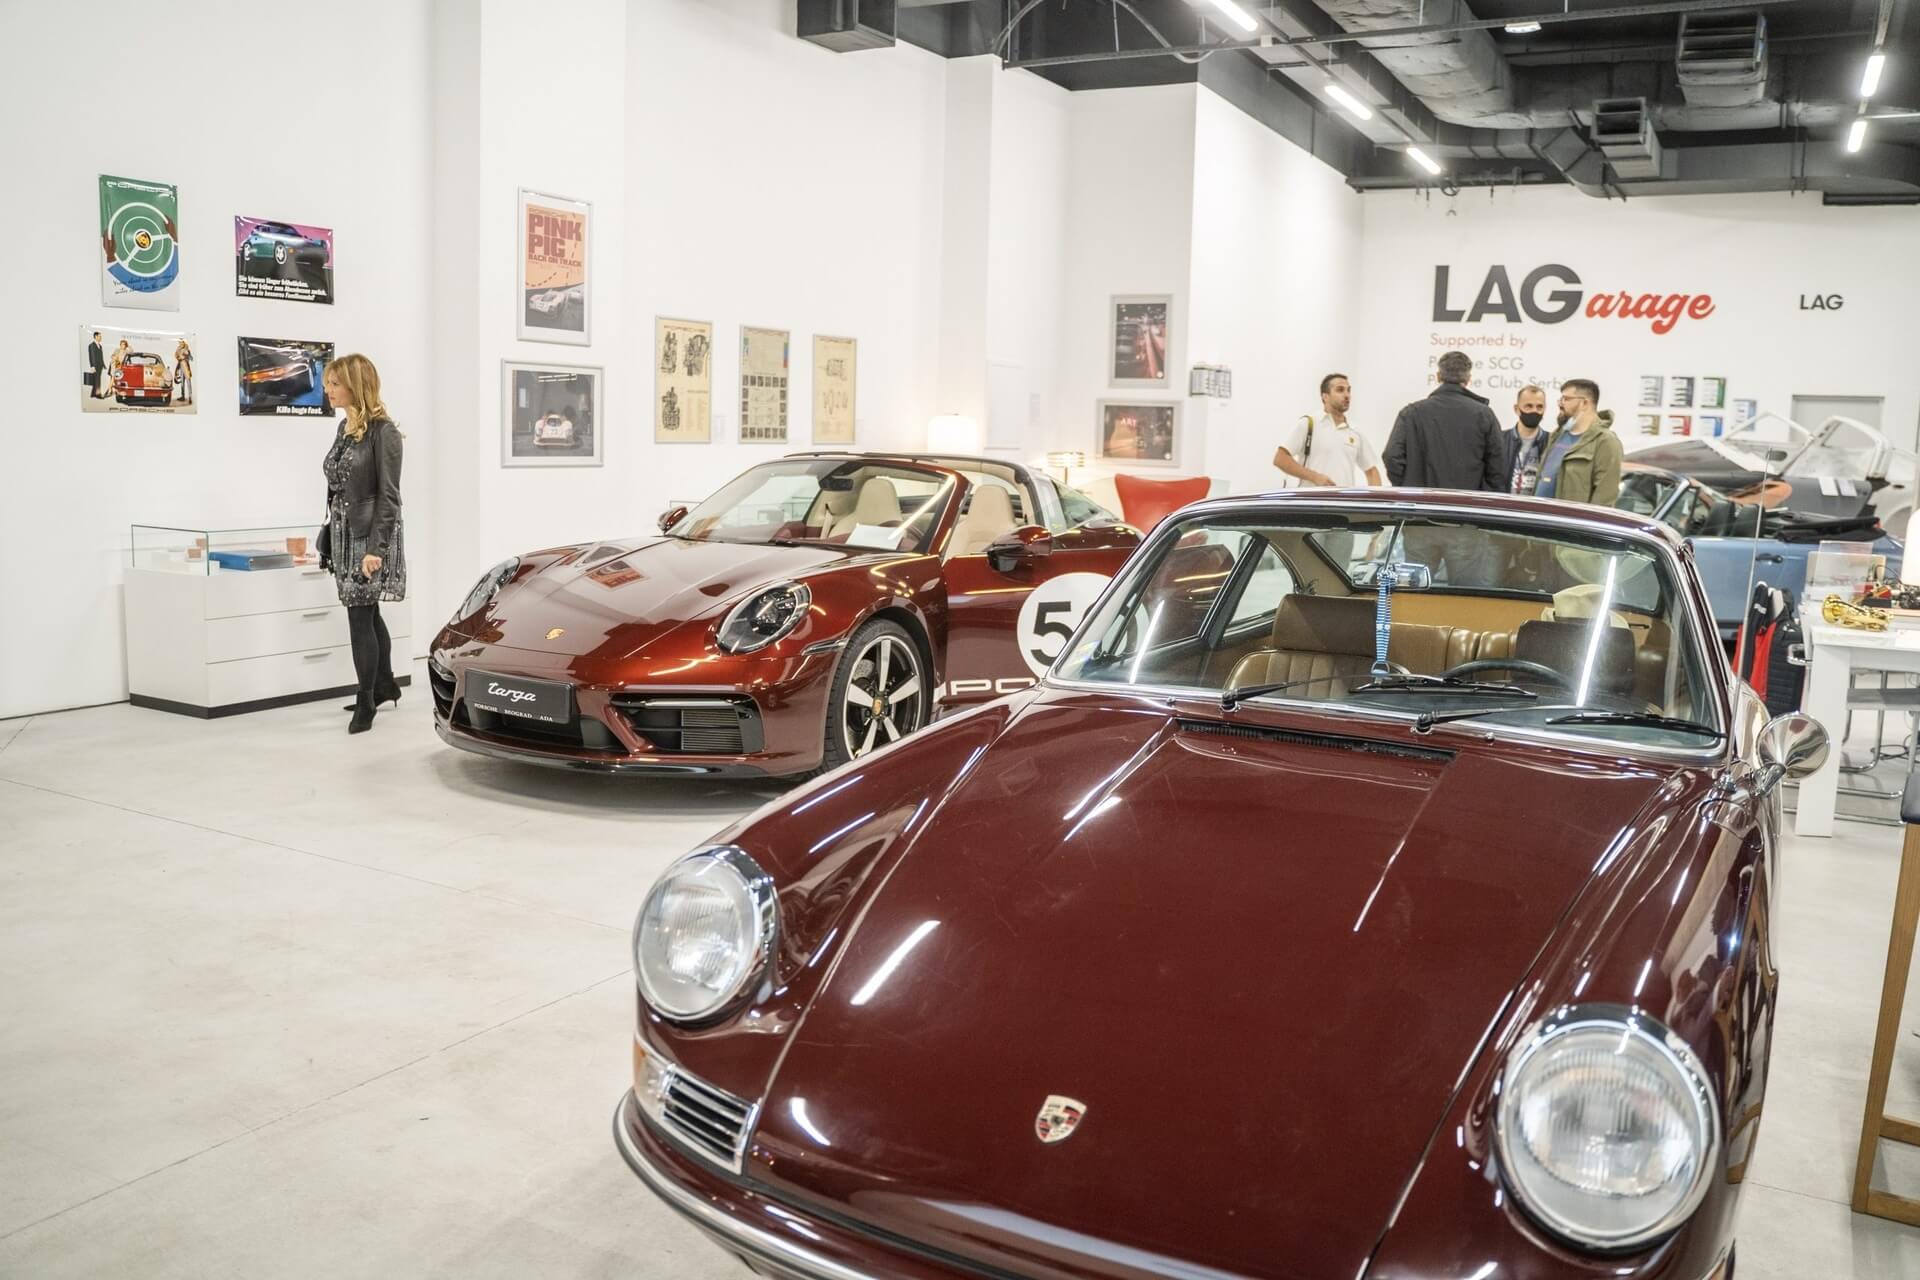 Vintage Porsche models at the exhibition “LAGarage”